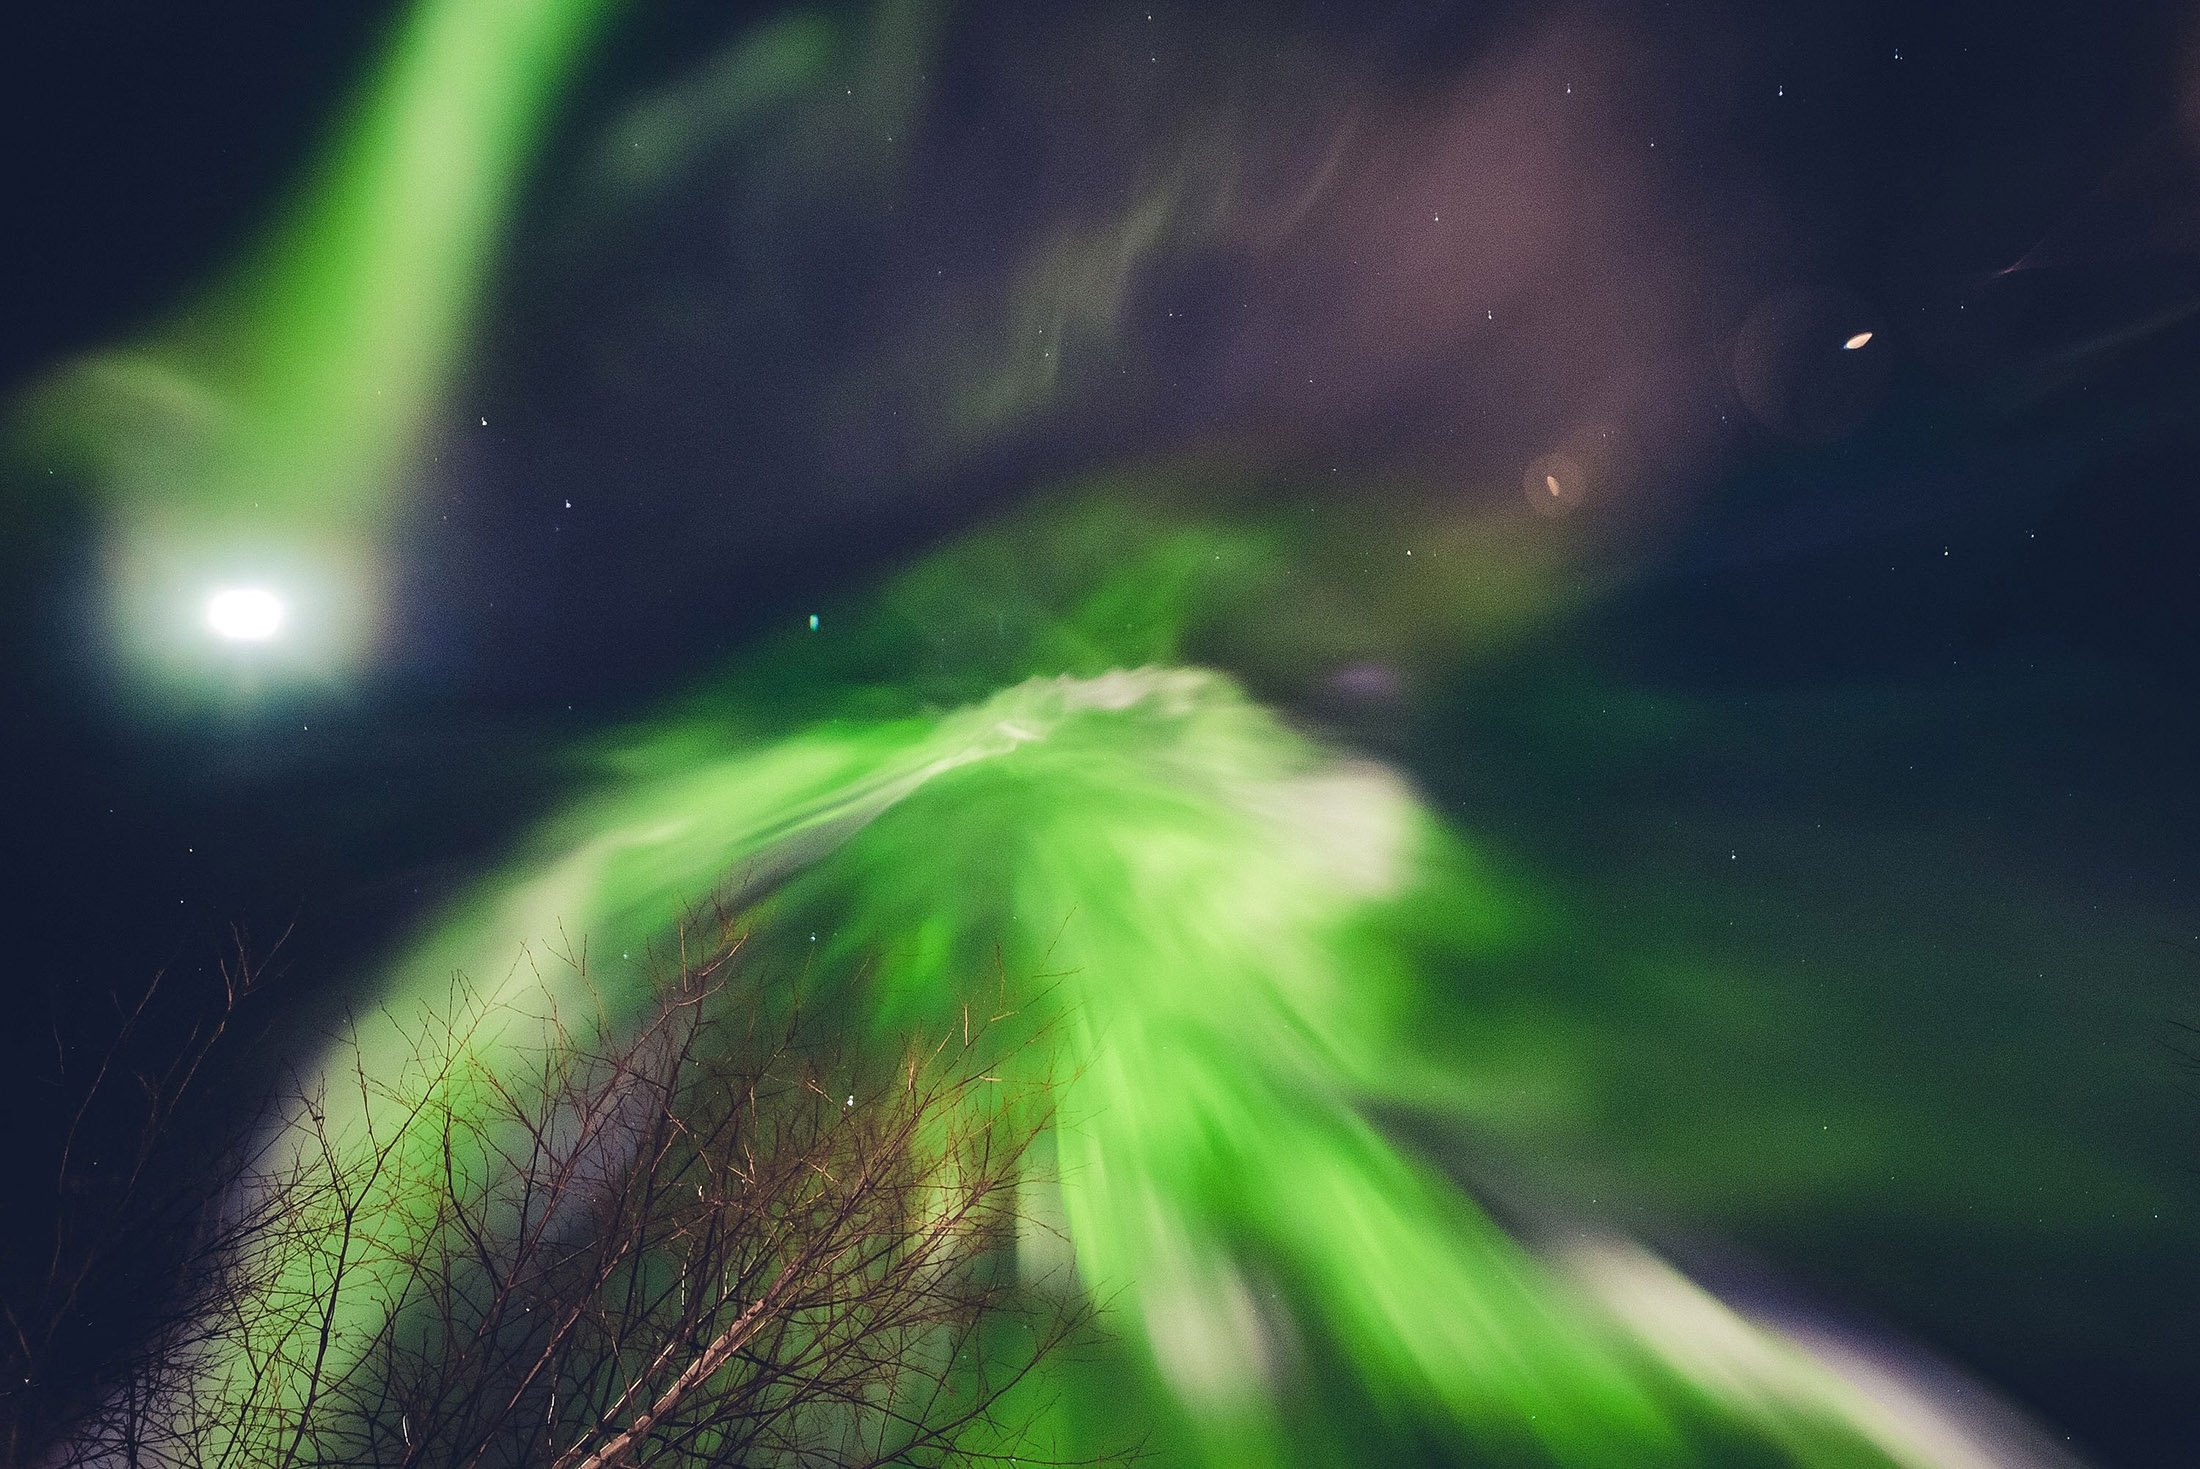 great Aurora Borealis image